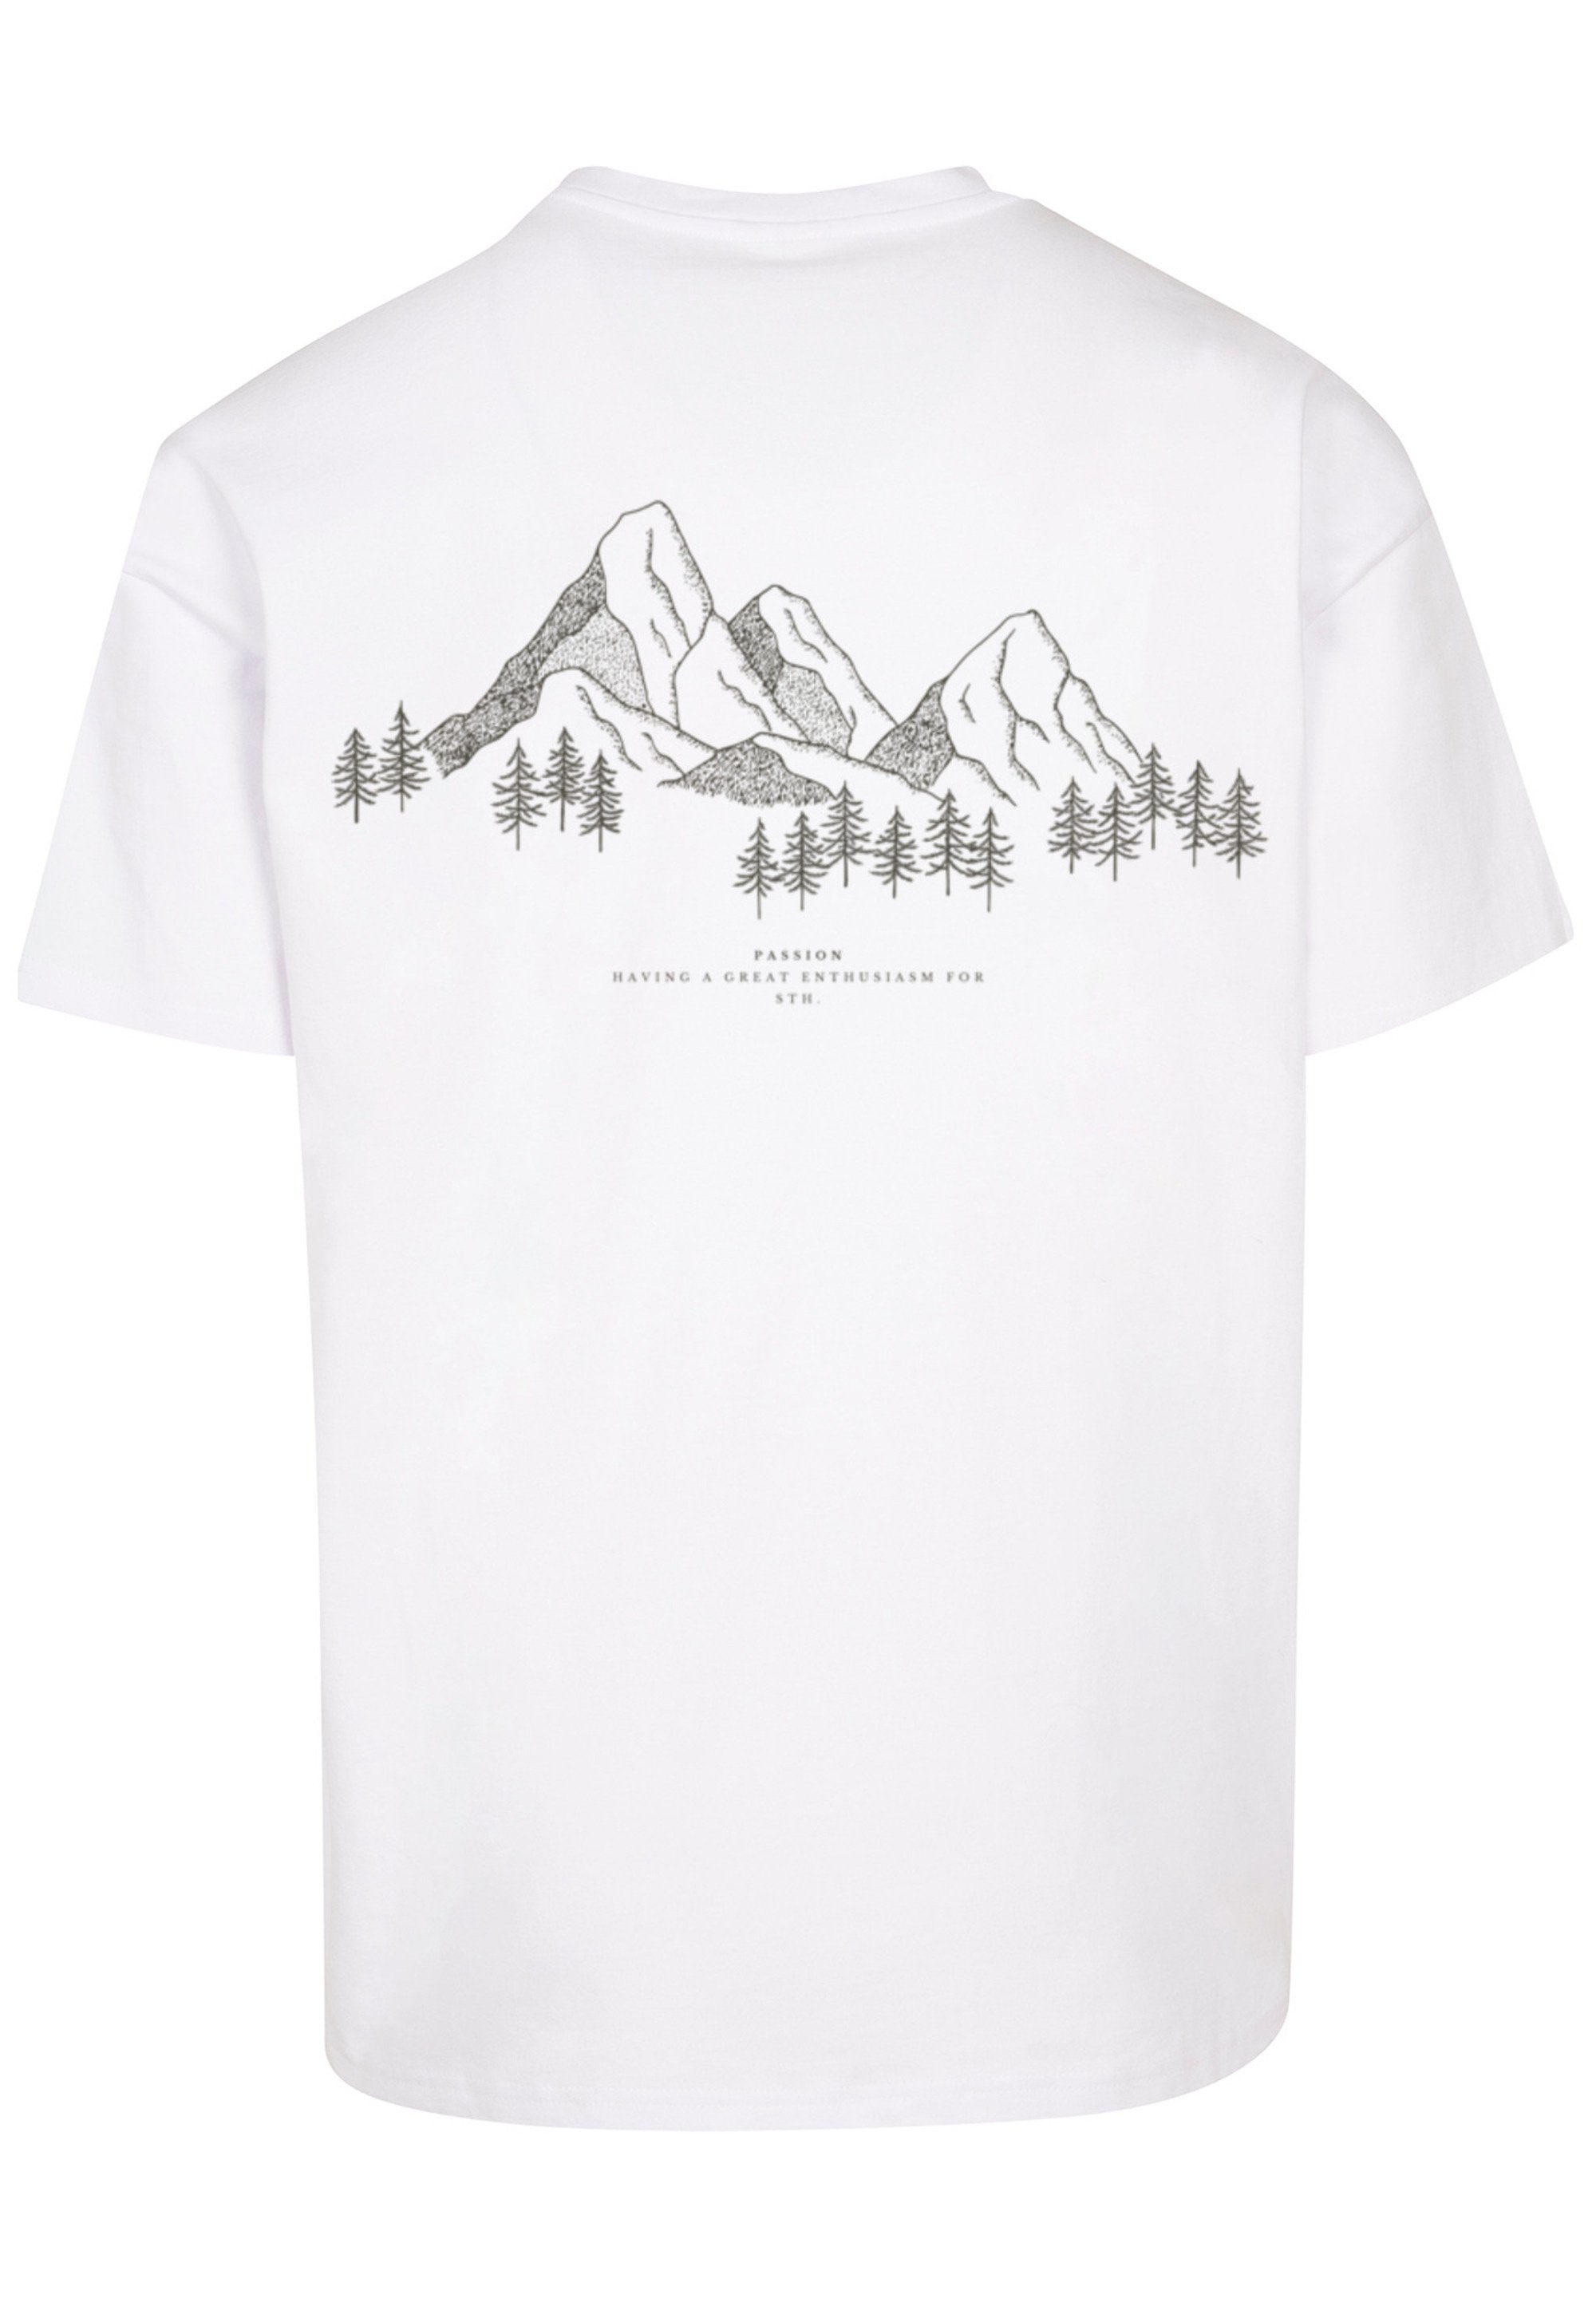 F4NT4STIC T-Shirt Mountain Berge Urlaub Print Schnee weiß Ski Winter